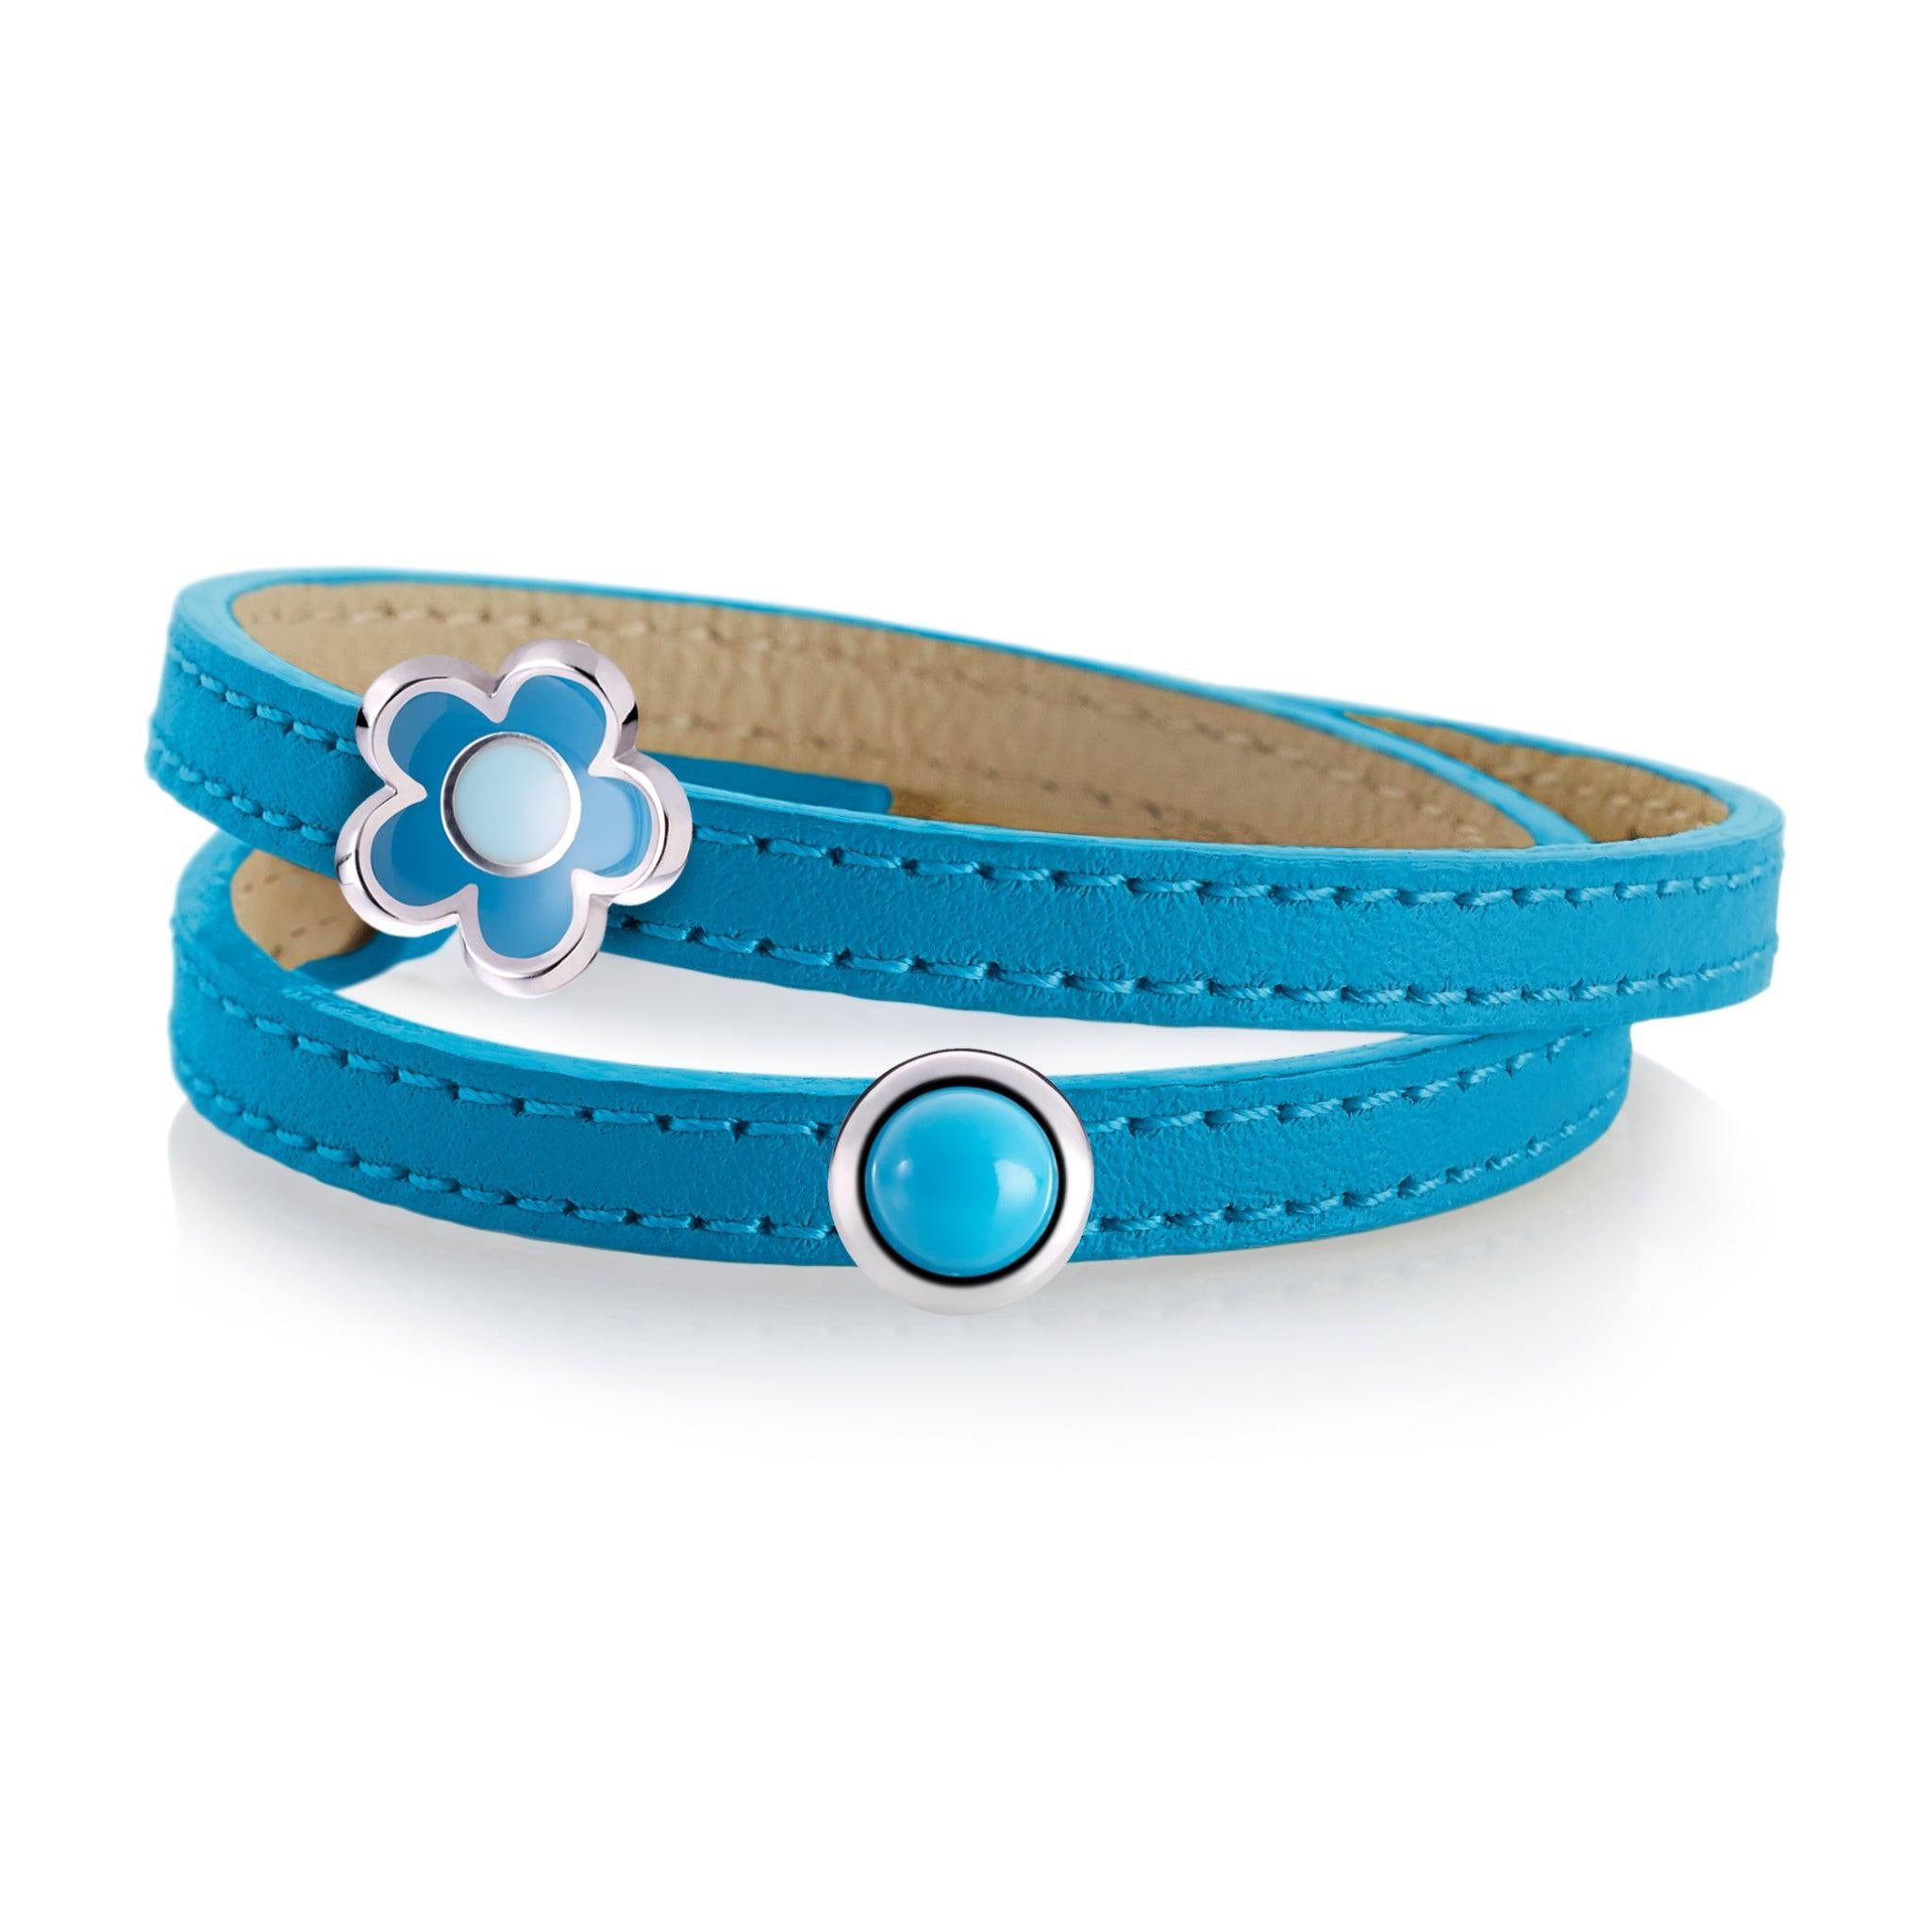 2er Set Flower bicolor und Loop (blau türkis) - 1Karat